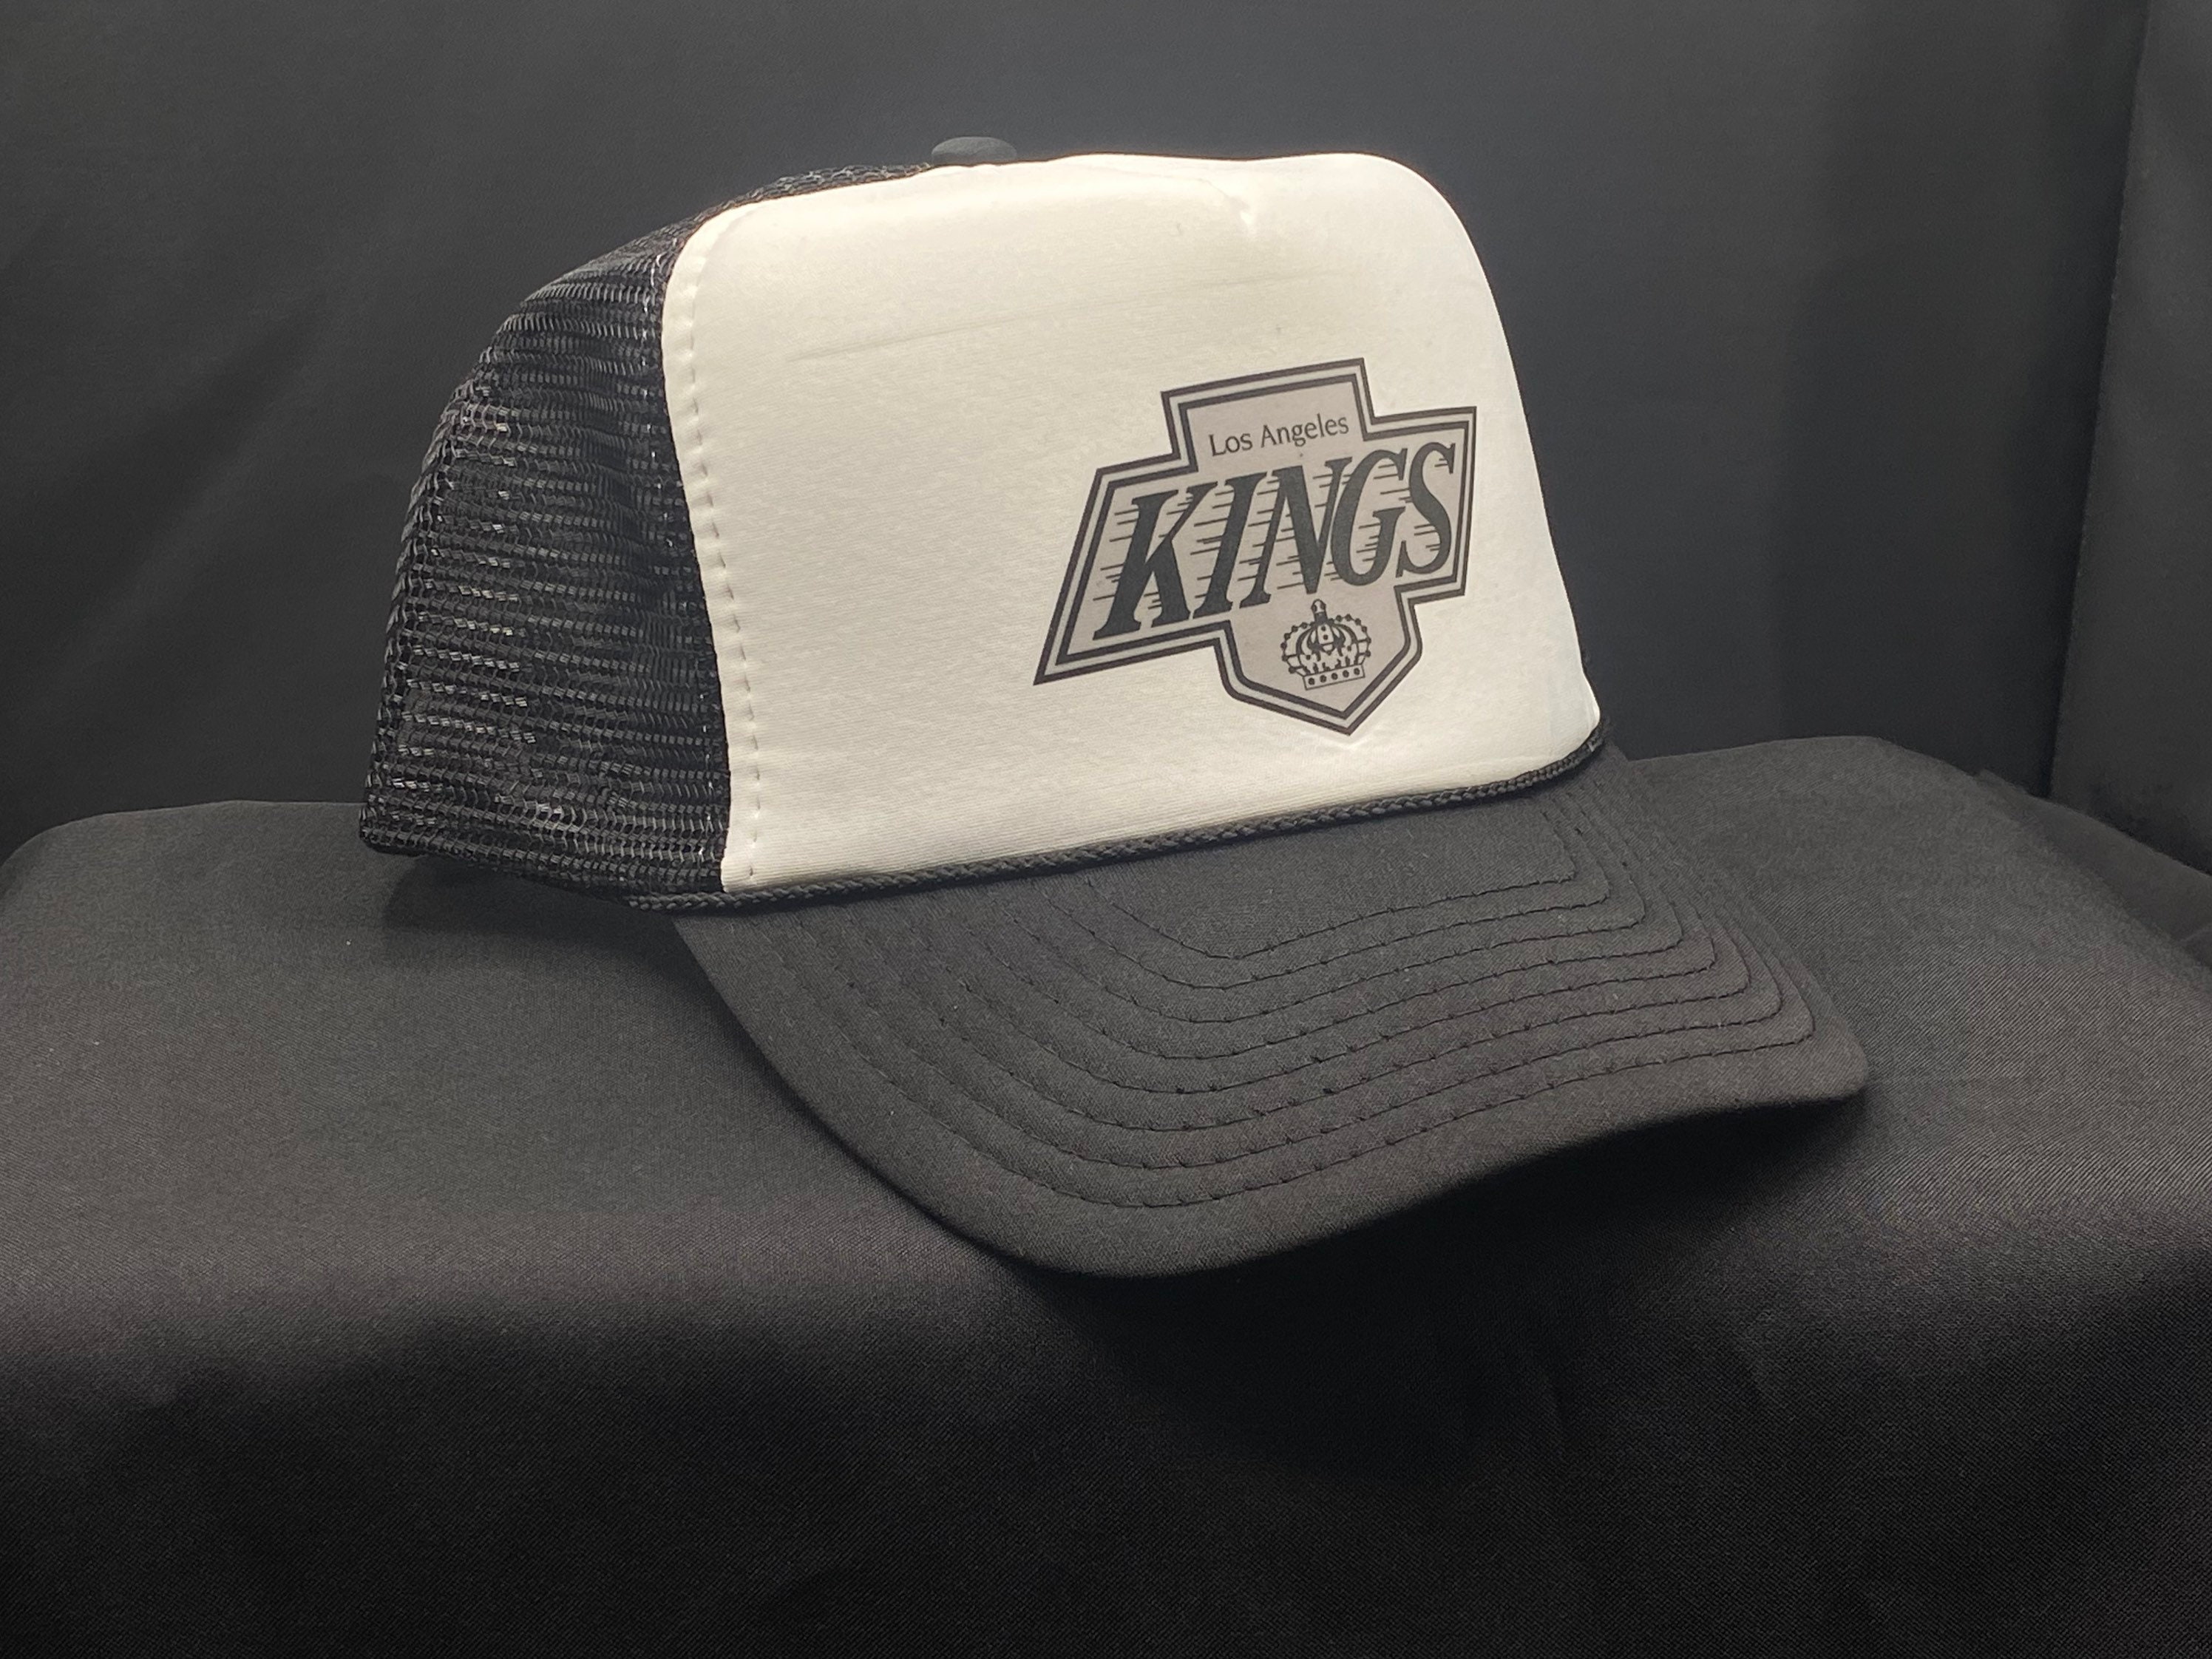 stake Out LA Kings vintage grey cap Reference : 3603